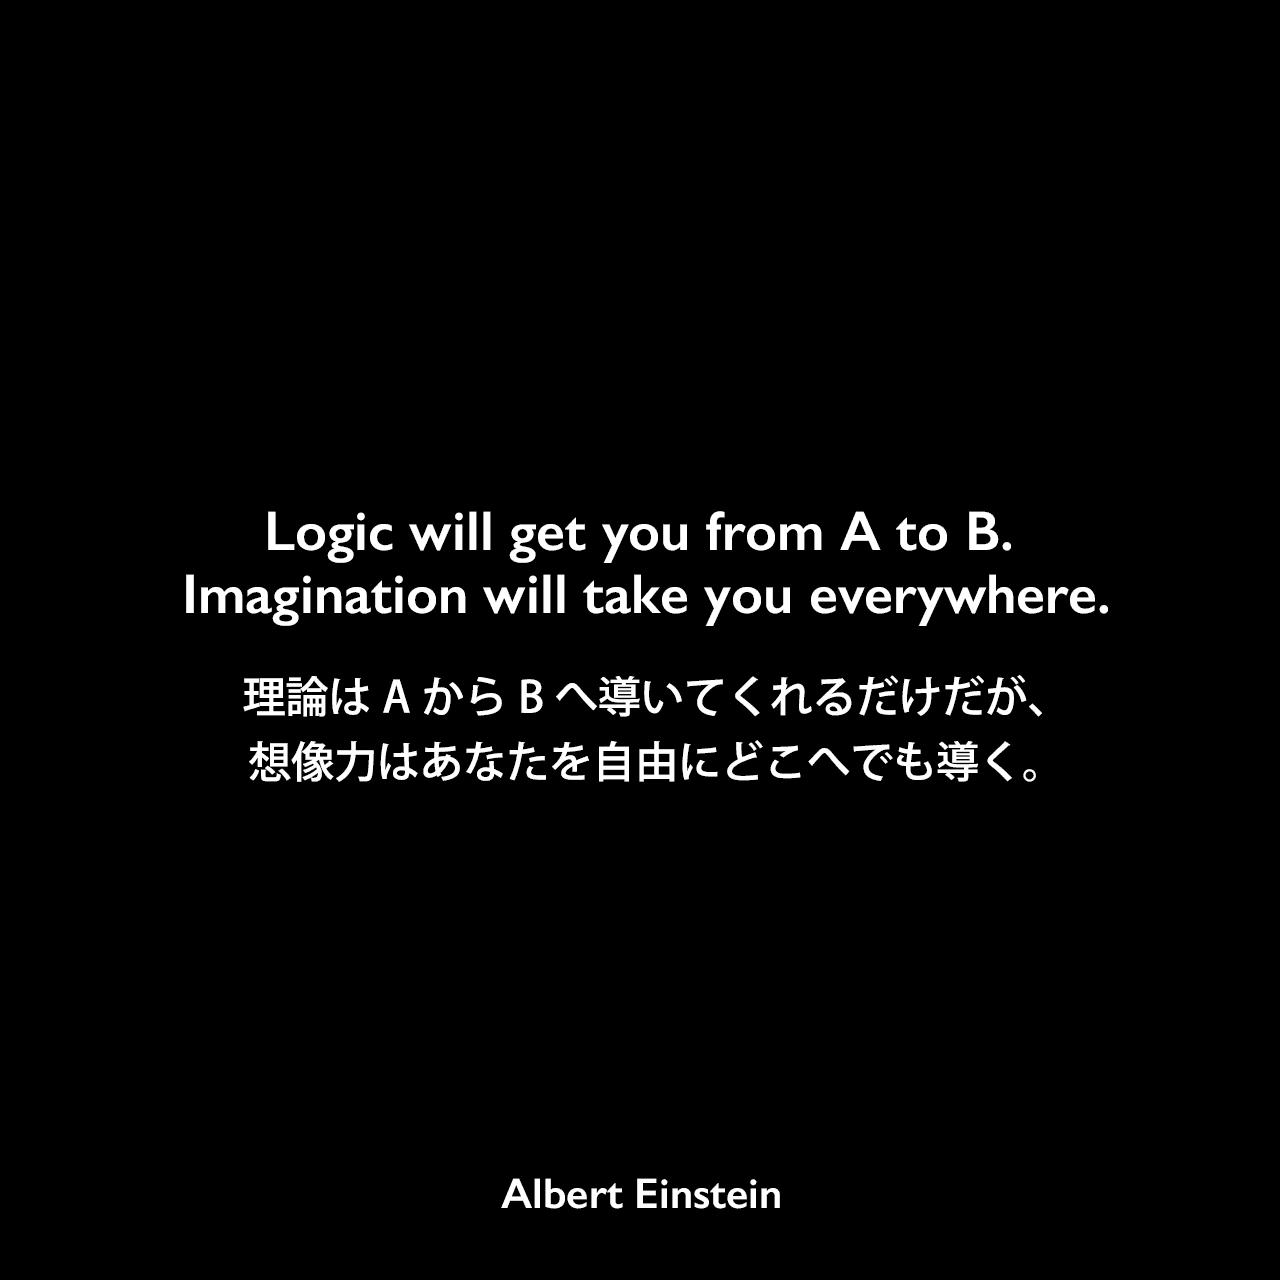 Logic will get you from A to B. Imagination will take you everywhere.理論はAからBへ導いてくれるだけだが、想像力はあなたを自由にどこへでも導く。Albert Einstein